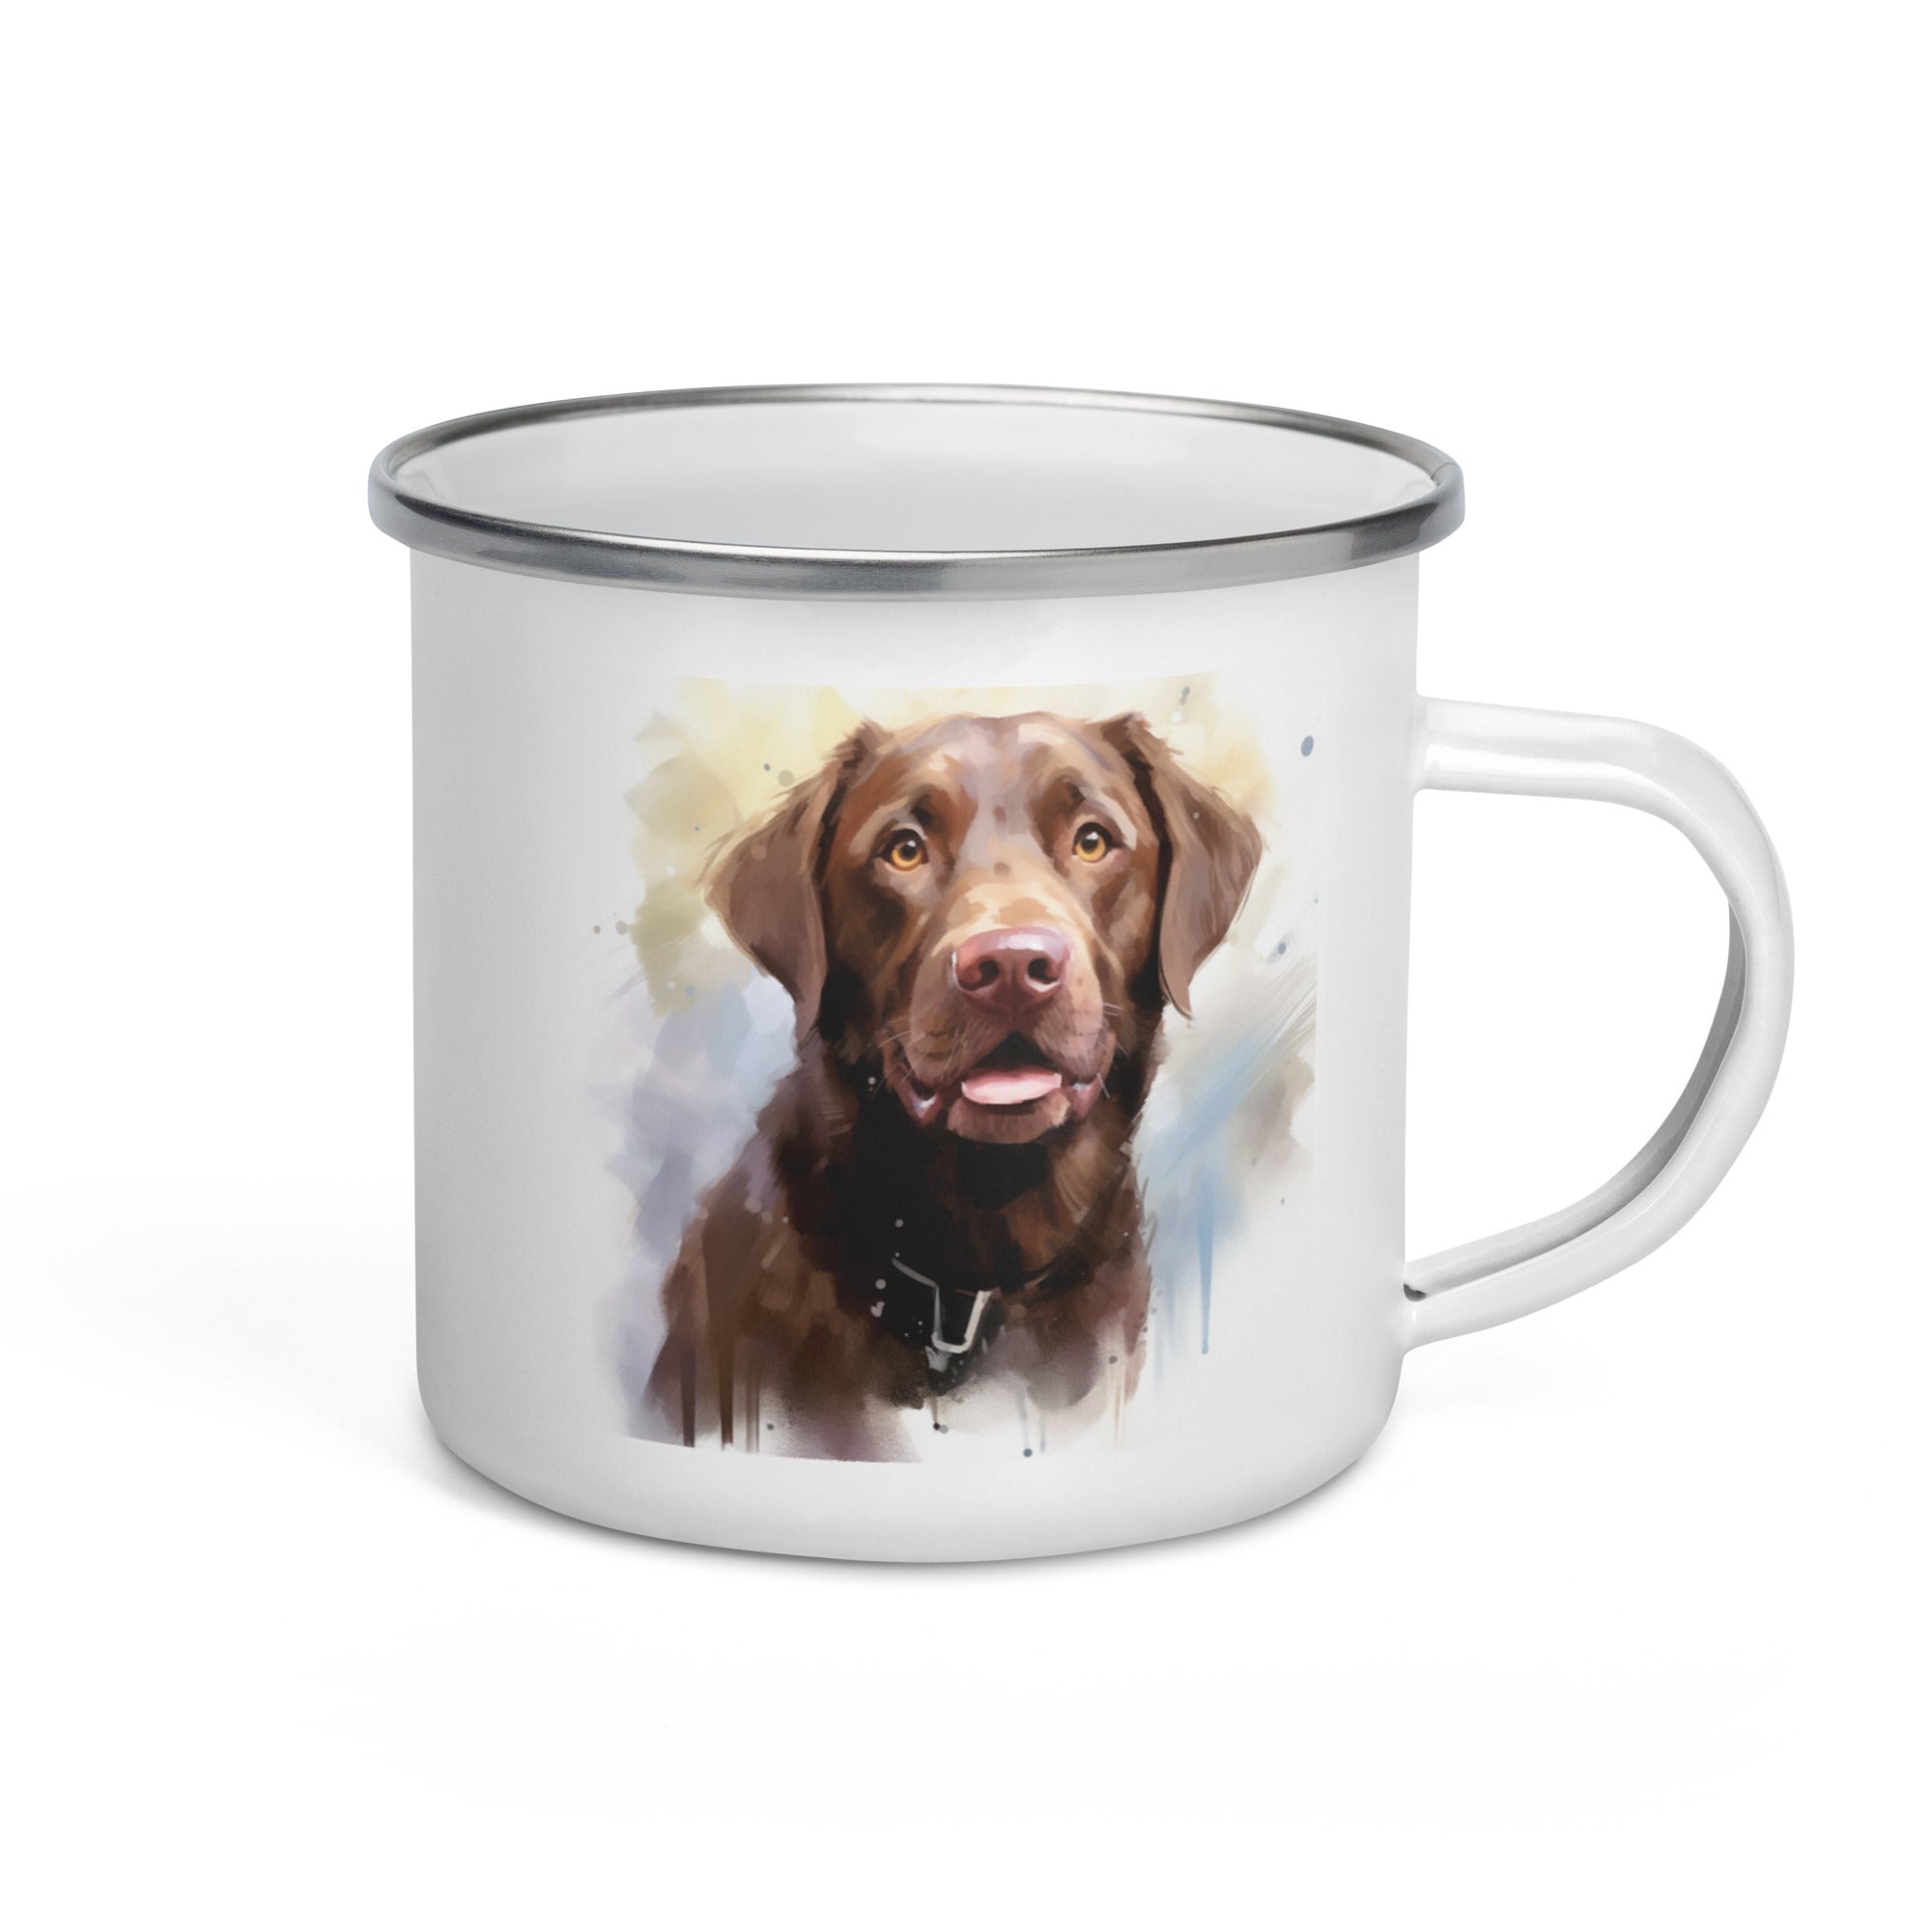 Enamel Mug, Coffee cup, Labrador Dog Mug, camping mug, gift